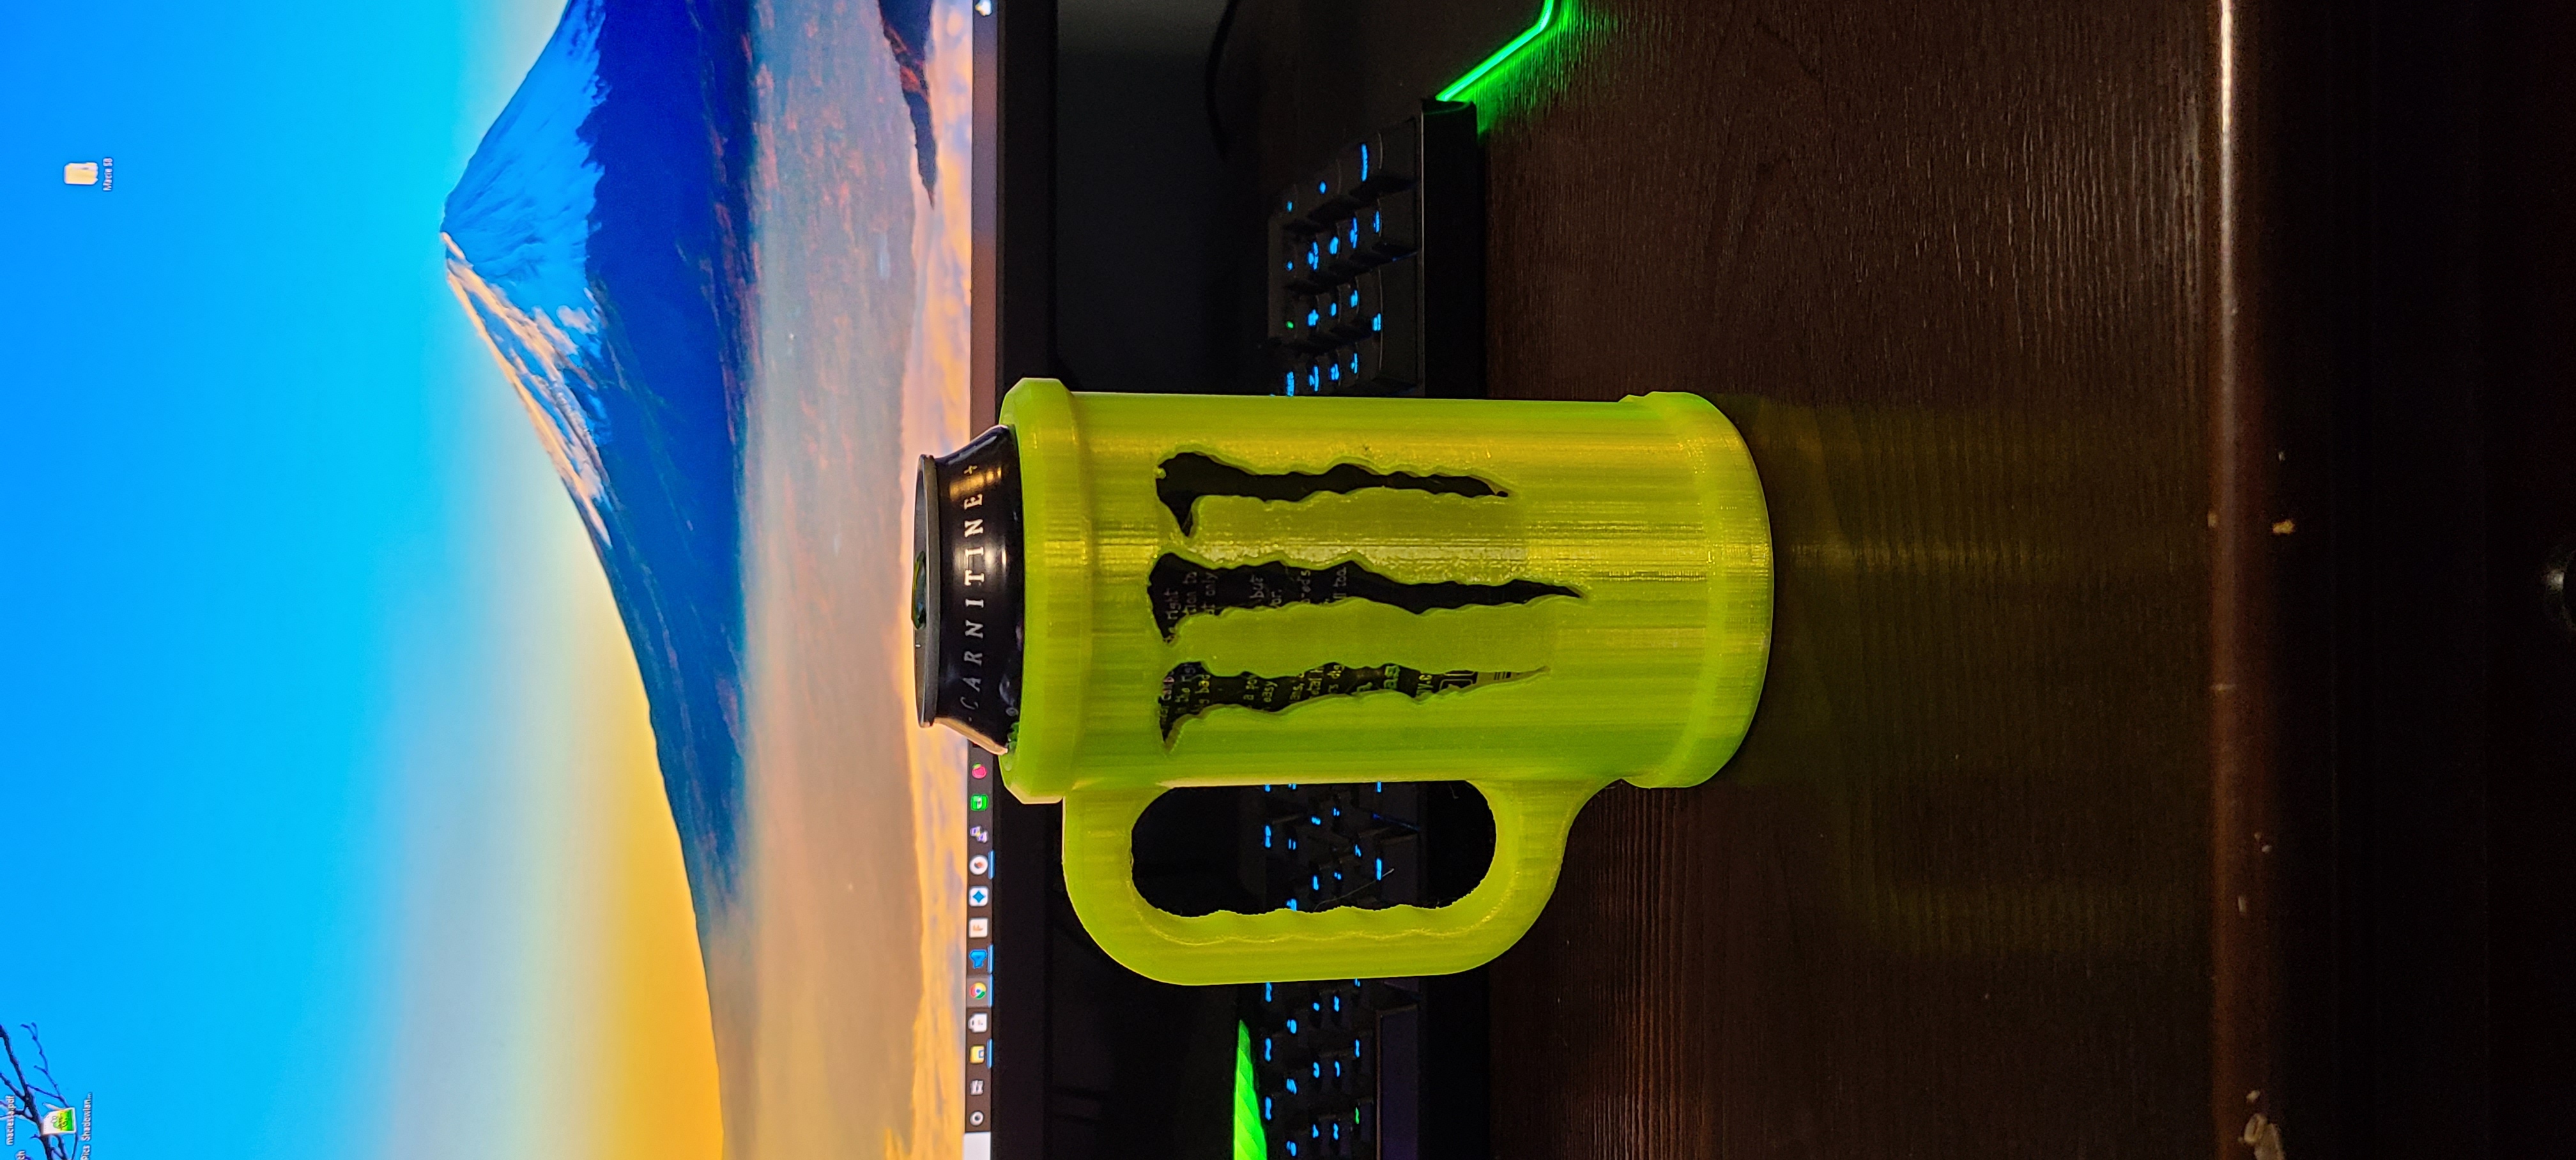 3D Printed Monster Energy Drink Holder